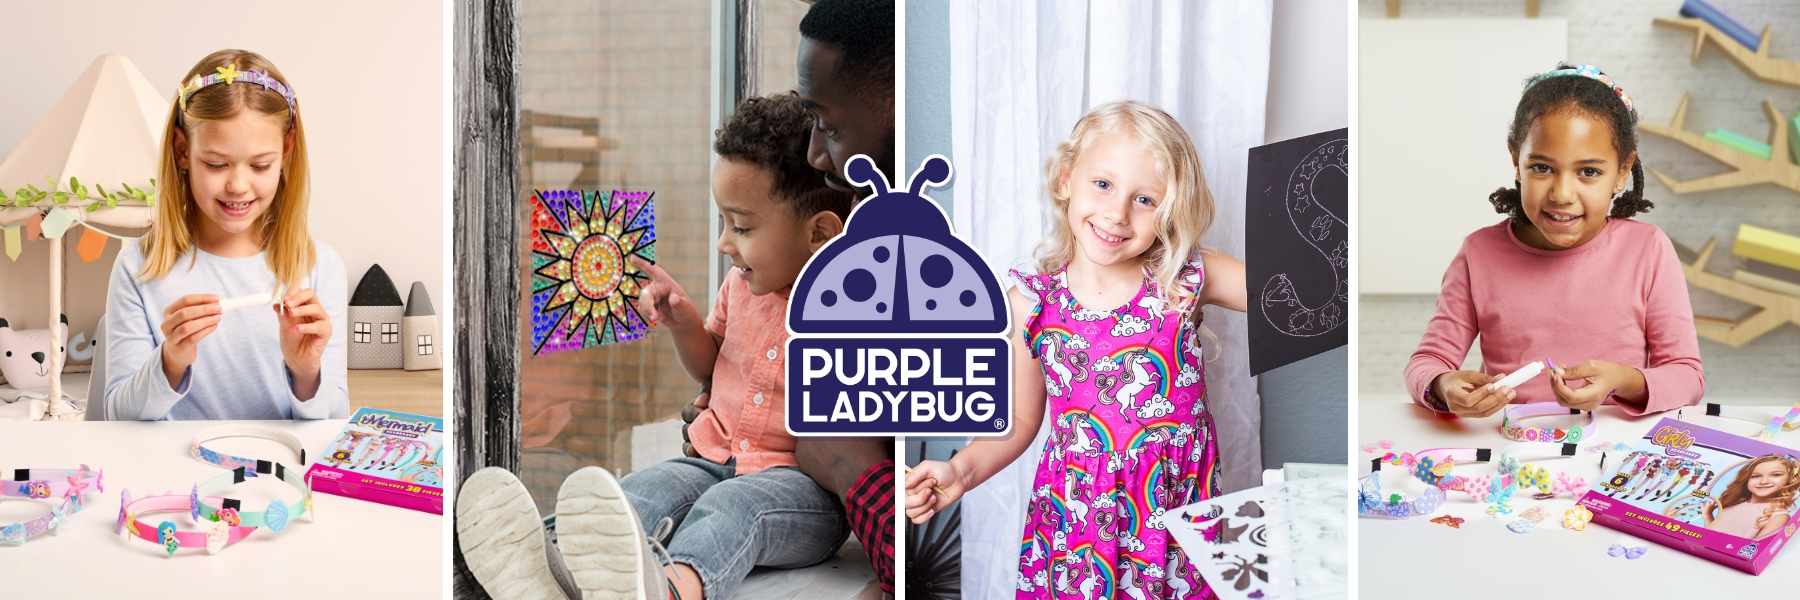 FREE Purple Ladybug Sparkling Crafts Party